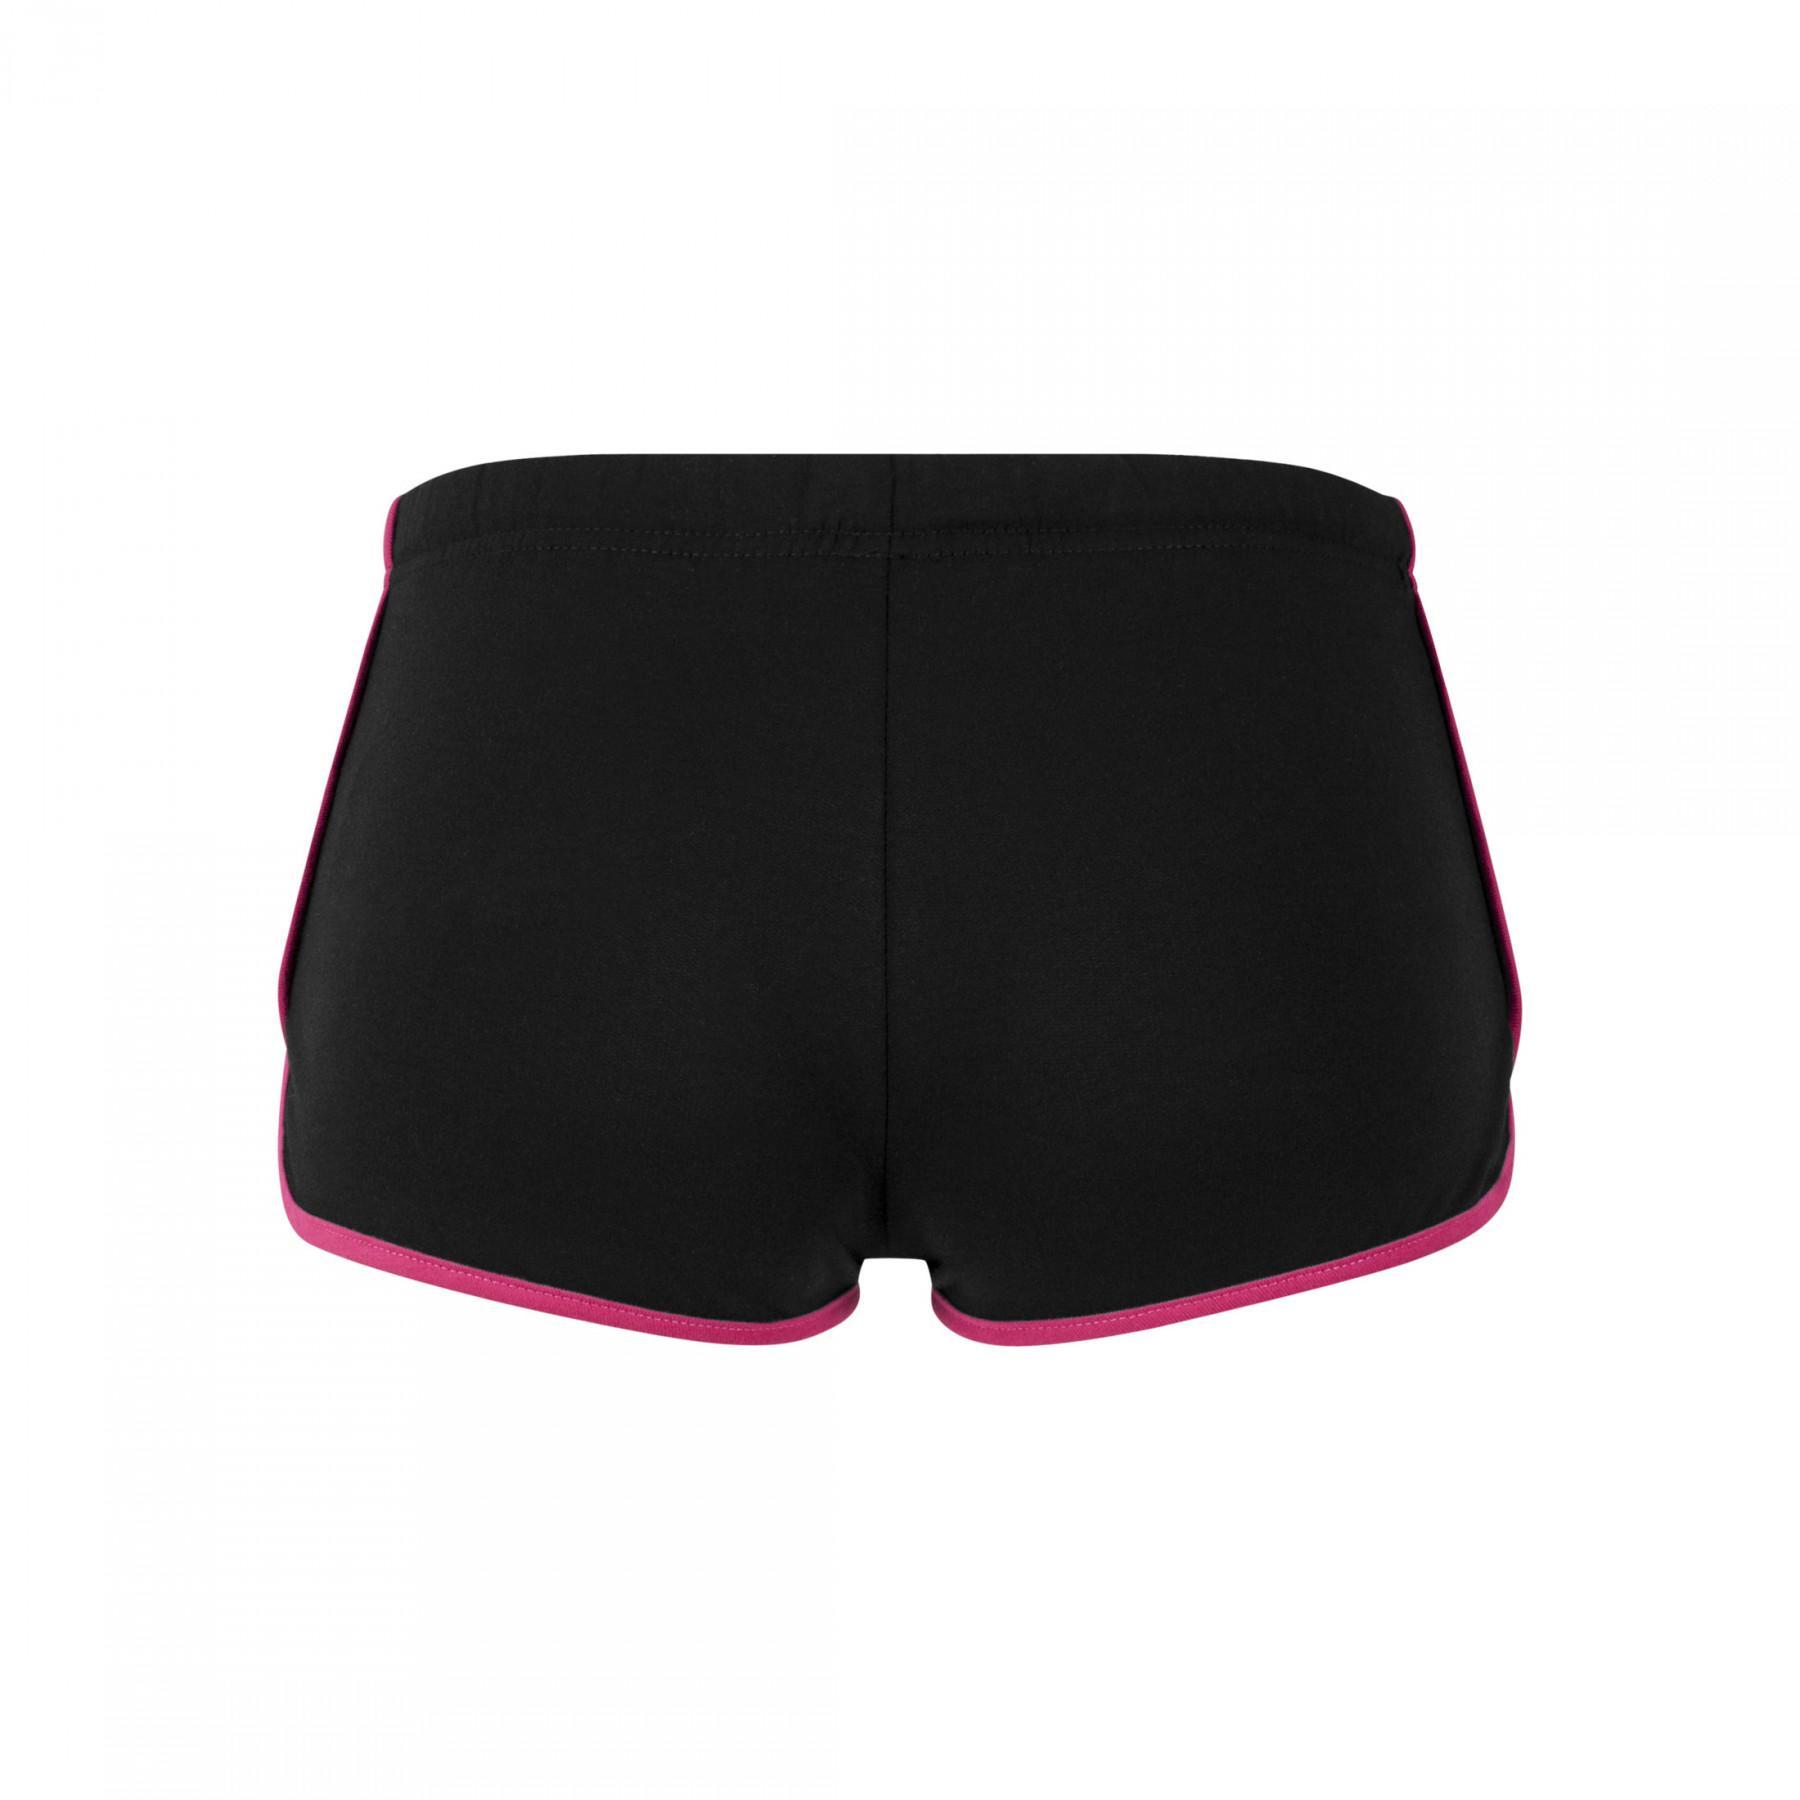 Urban Classic women's shorts French terry hot